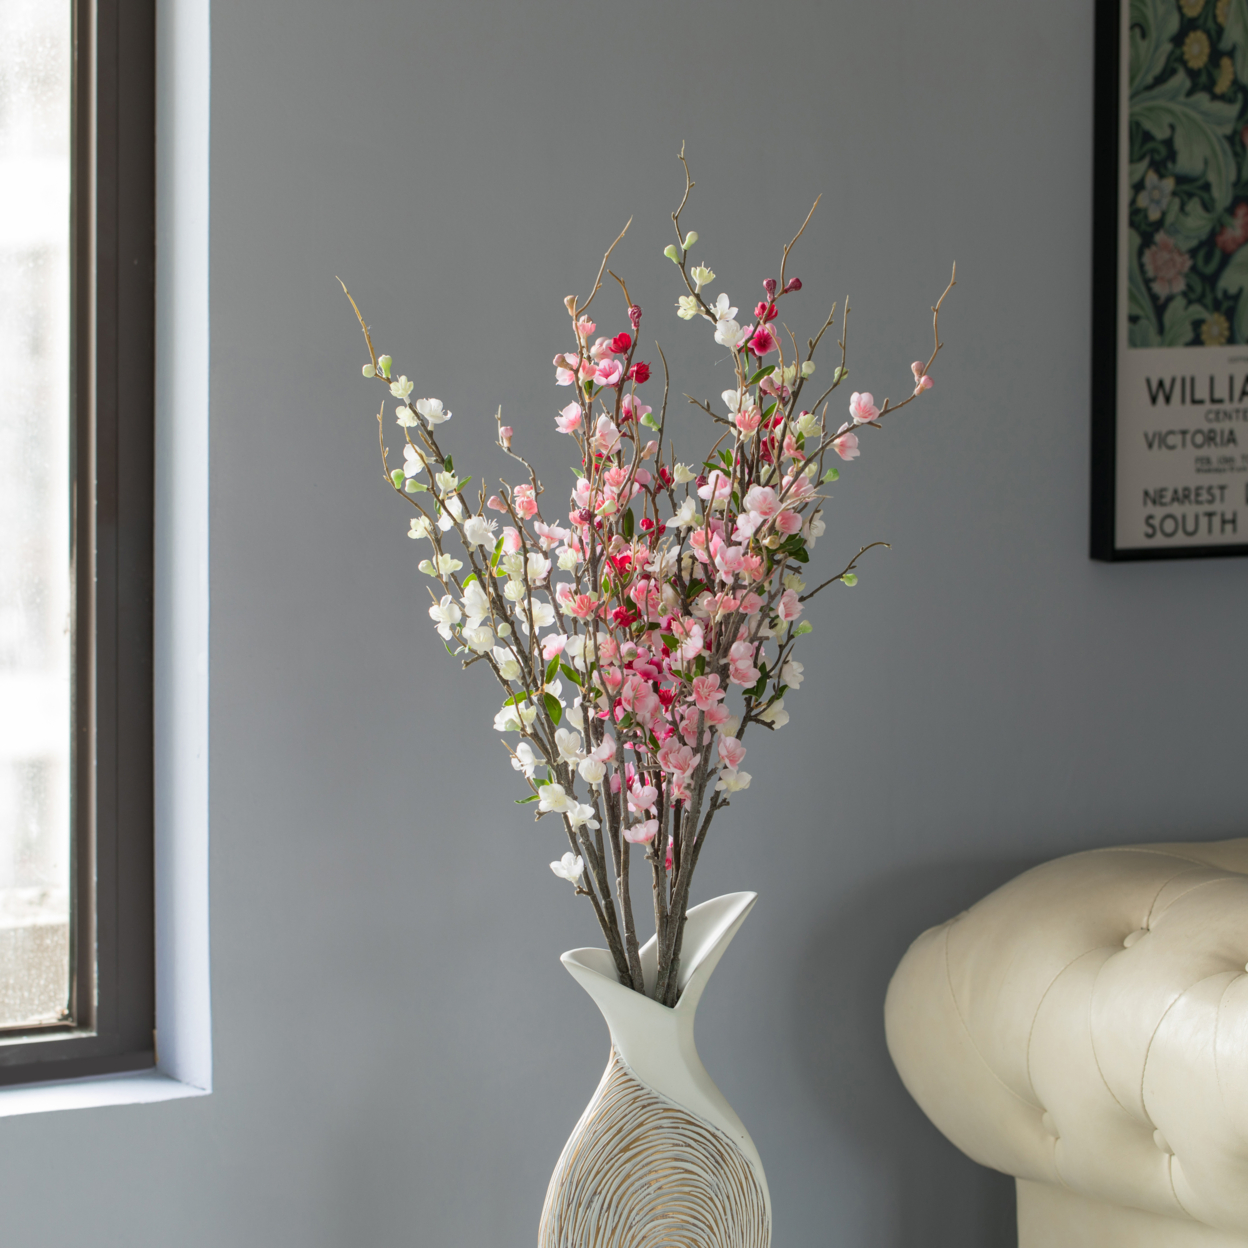 Peach Artificial Cherry Blossom Branch Stem For Home Decoration And Wedding Craft - Set Of 3